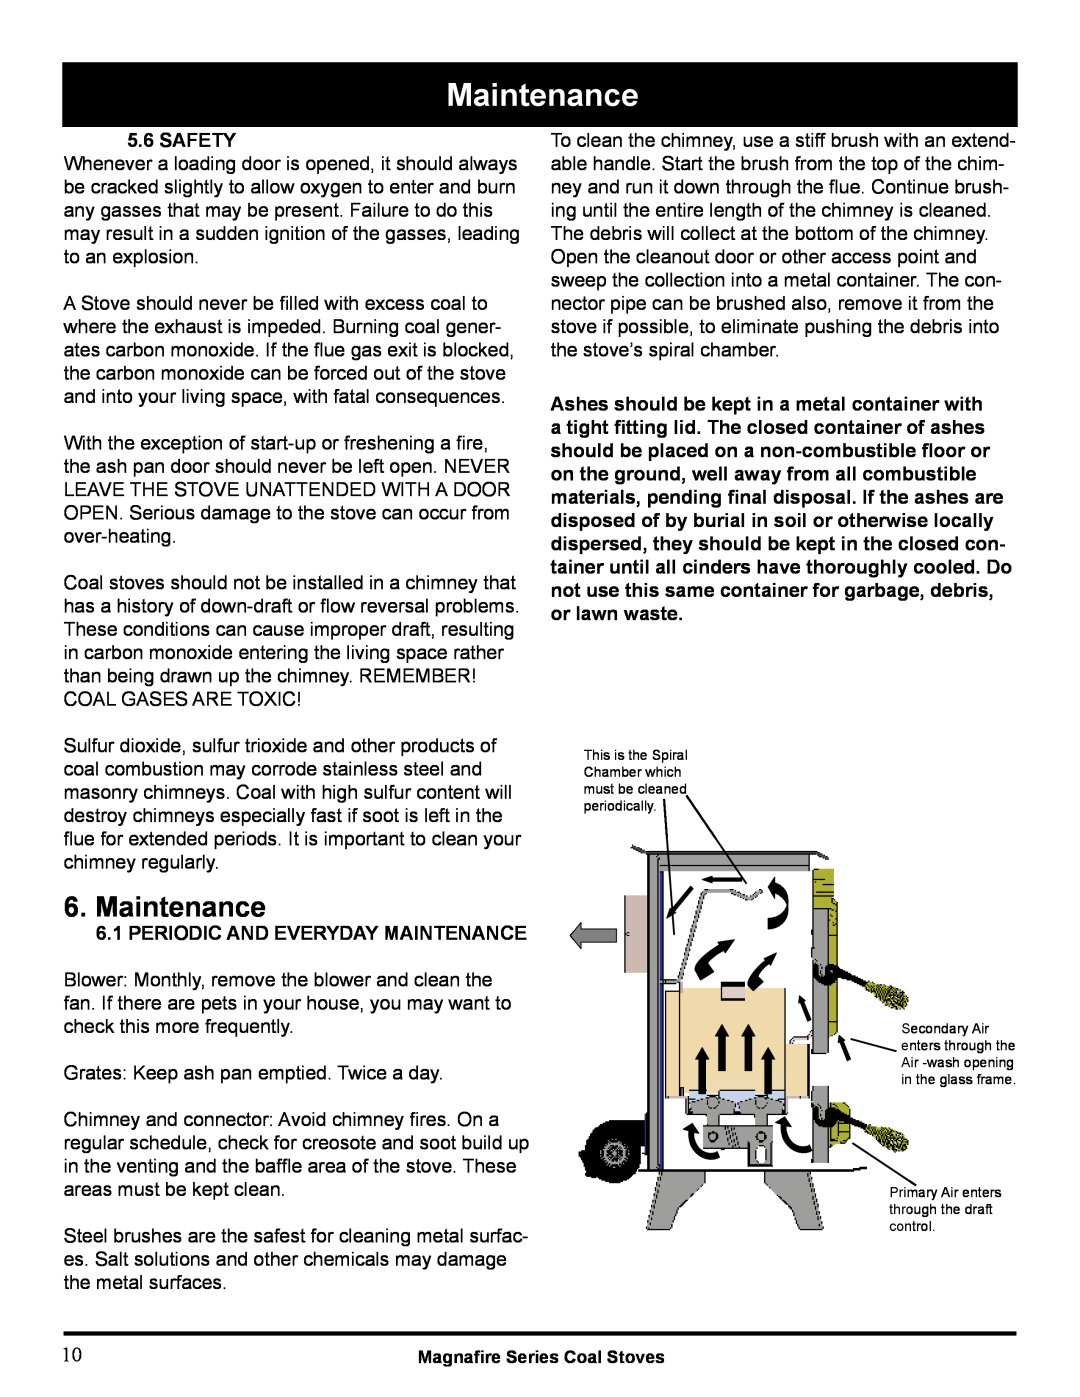 Harman Stove Company MARK III manual Safety, Periodic And Everyday Maintenance 